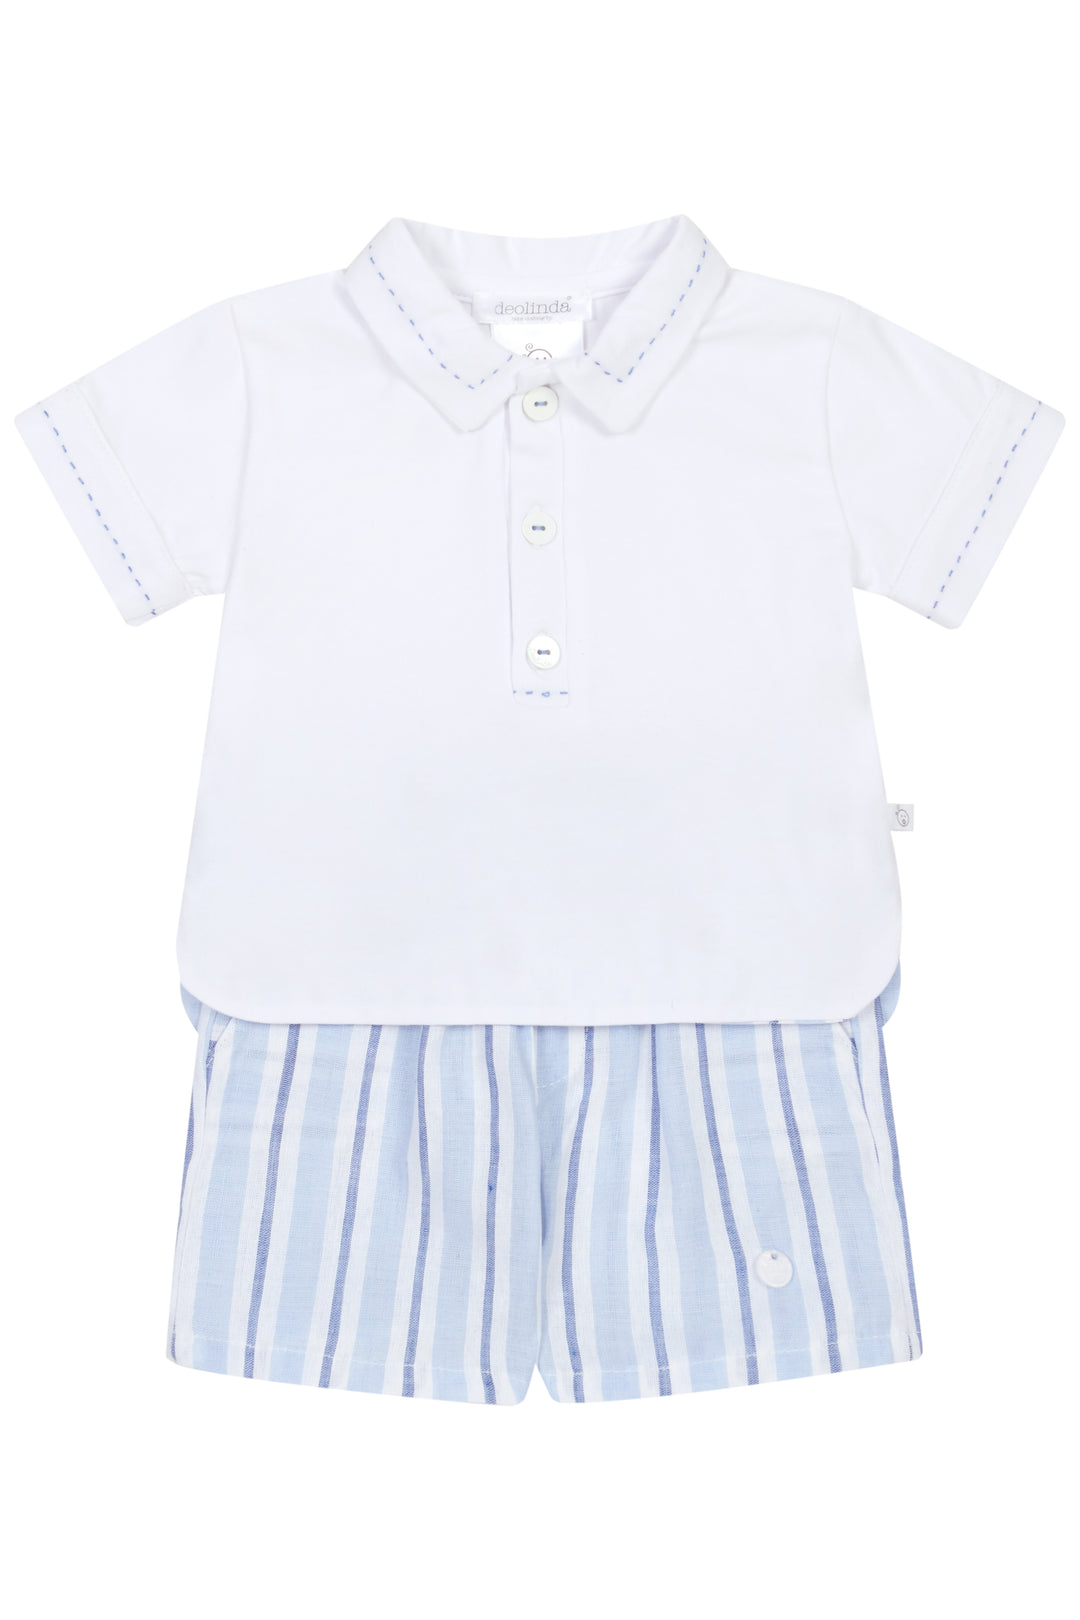 Deolinda PREORDER "Ambrose" Blue Striped Polo Shirt & Shorts | Millie and John